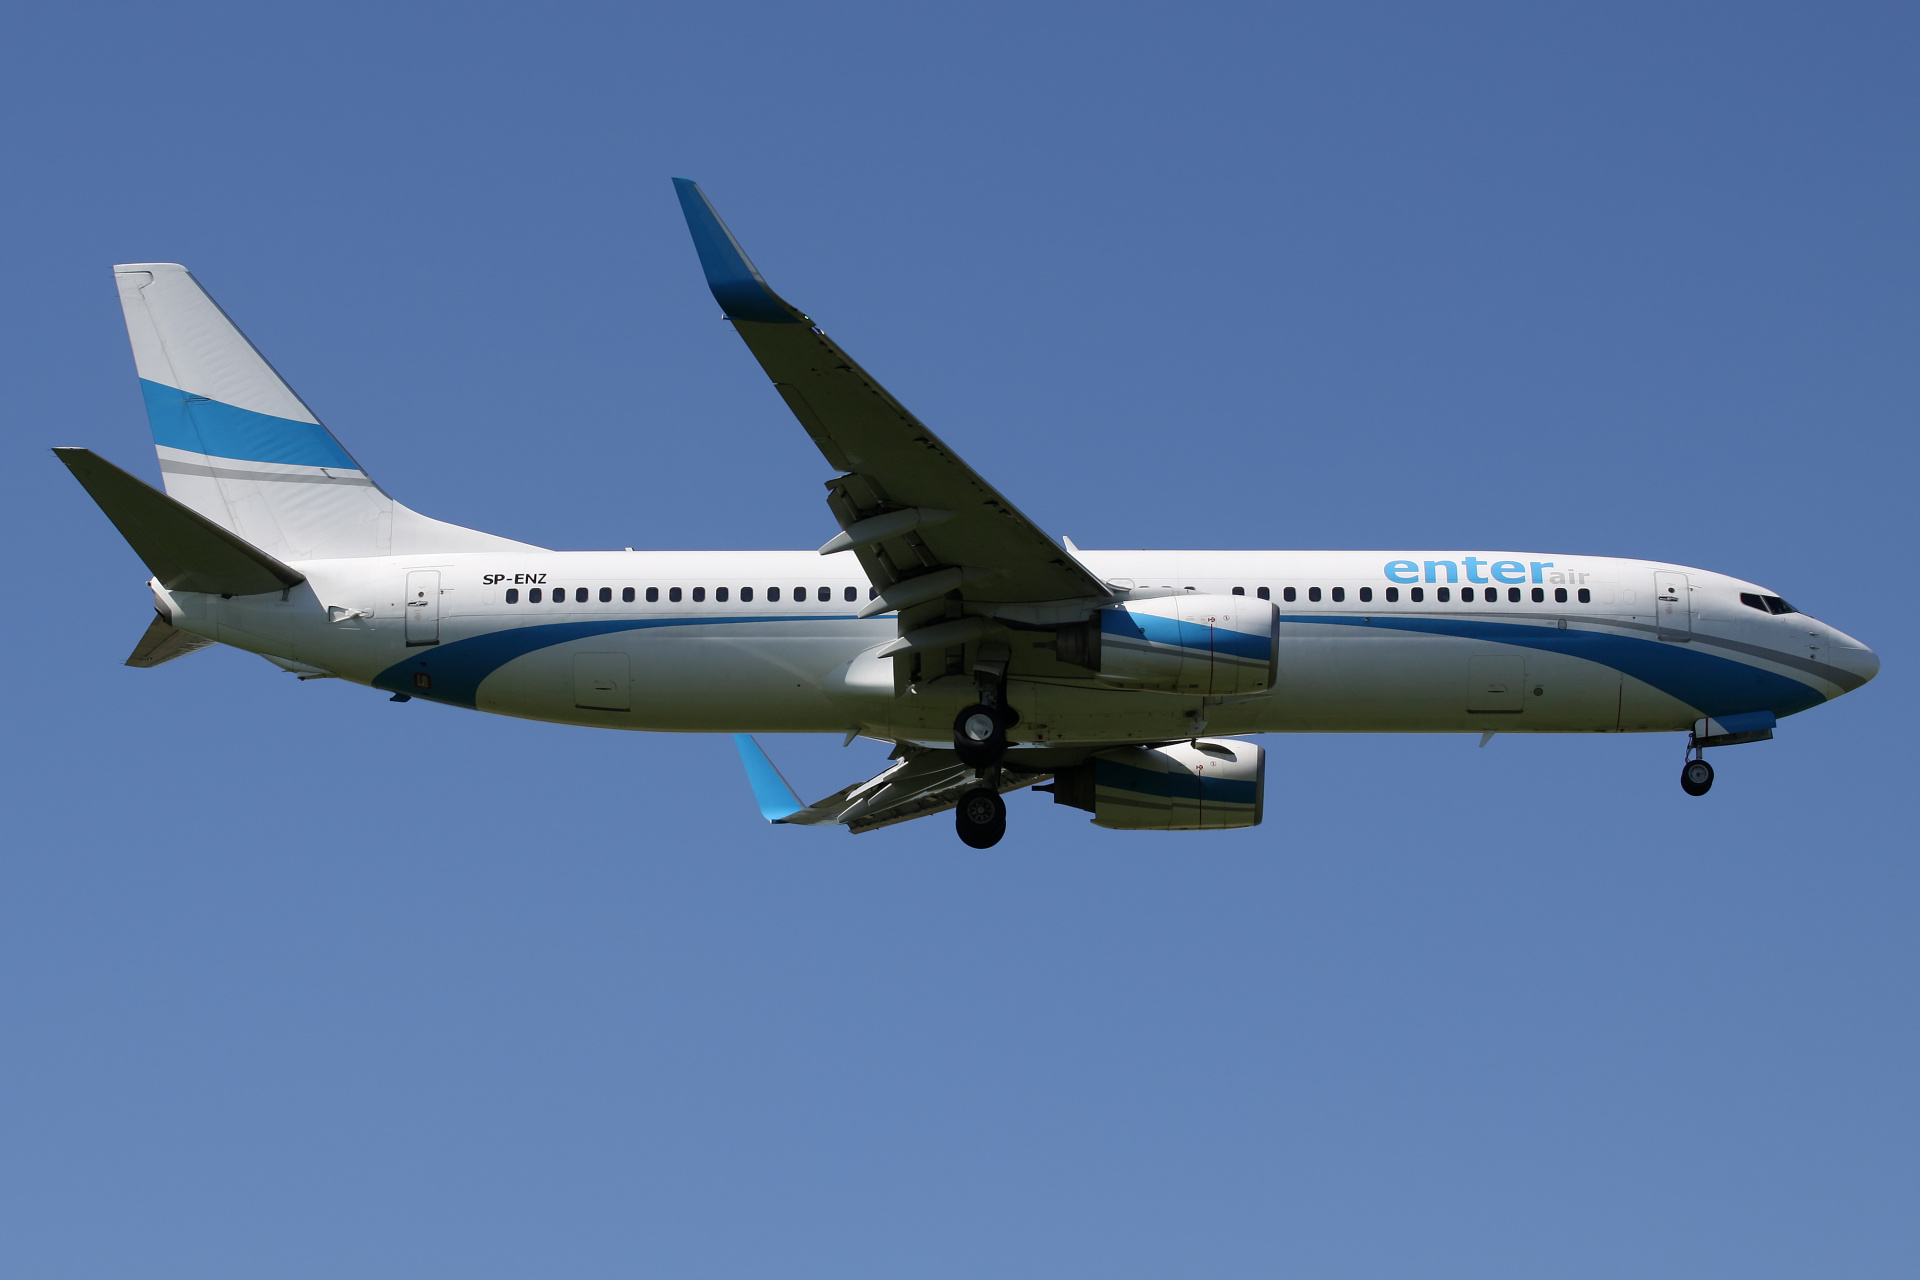 SP-ENZ (Aircraft » EPWA Spotting » Boeing 737-800 » Enter Air)